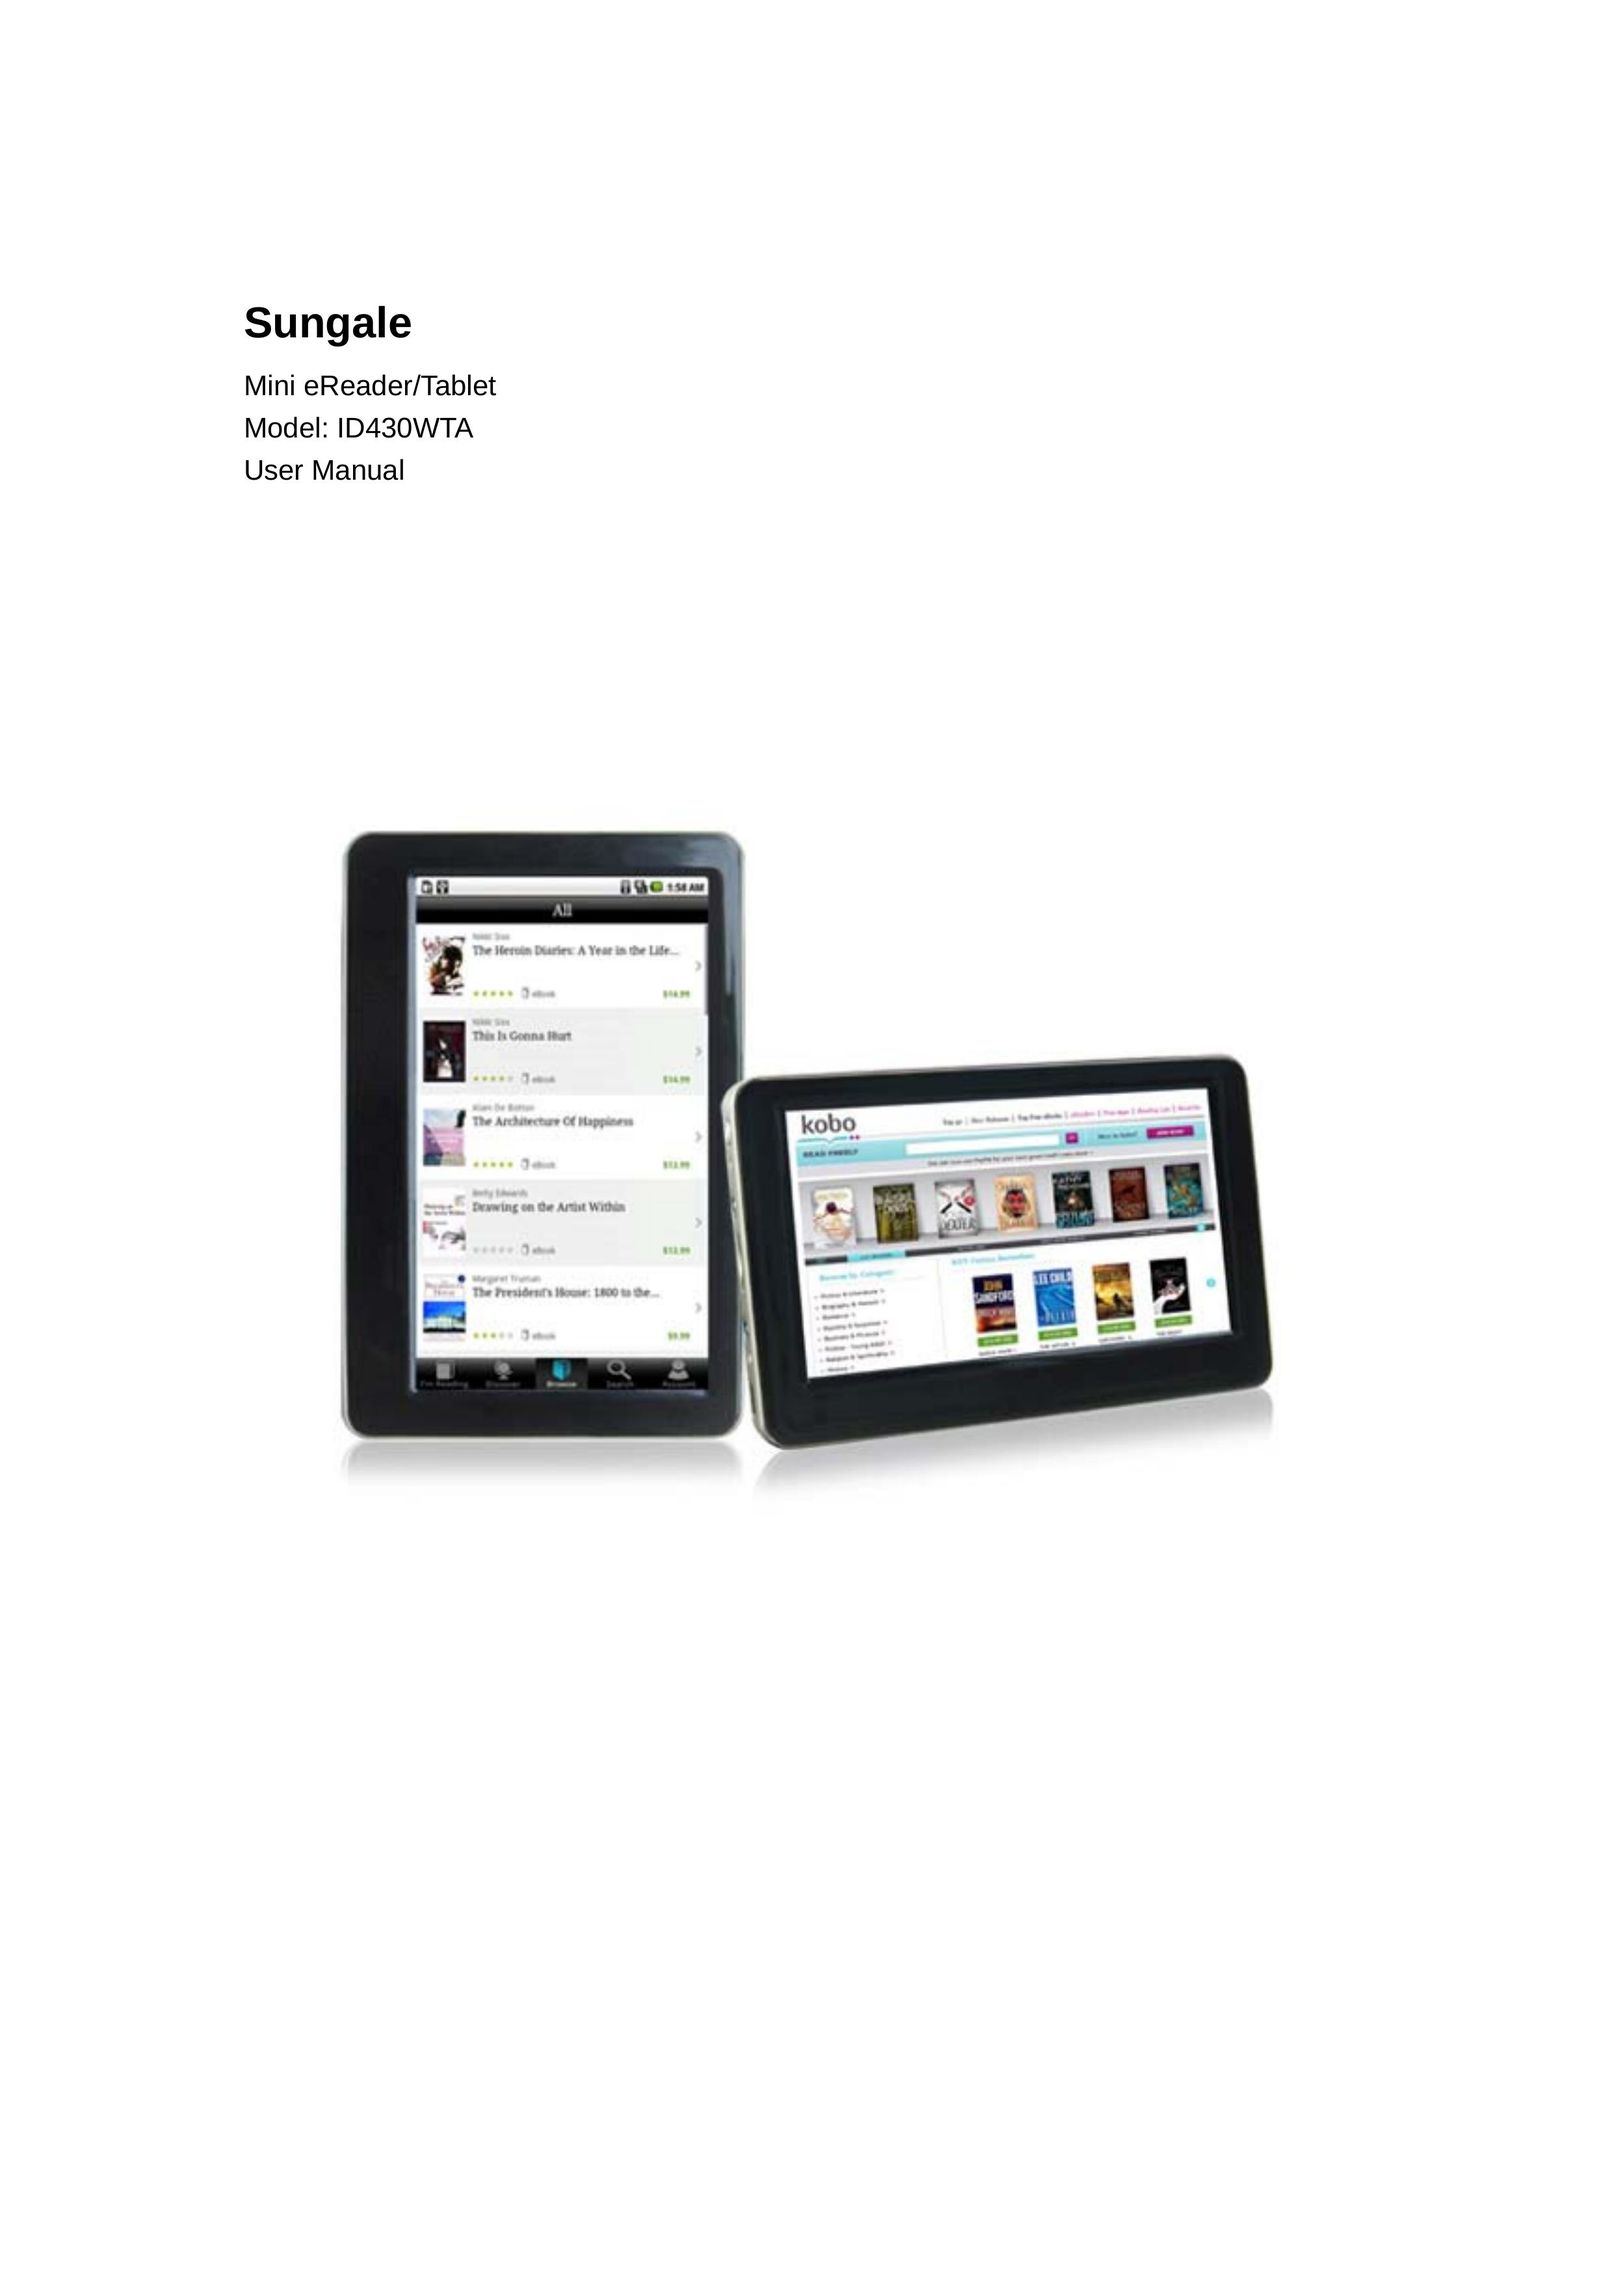 Sungale ID430WTA Tablet User Manual